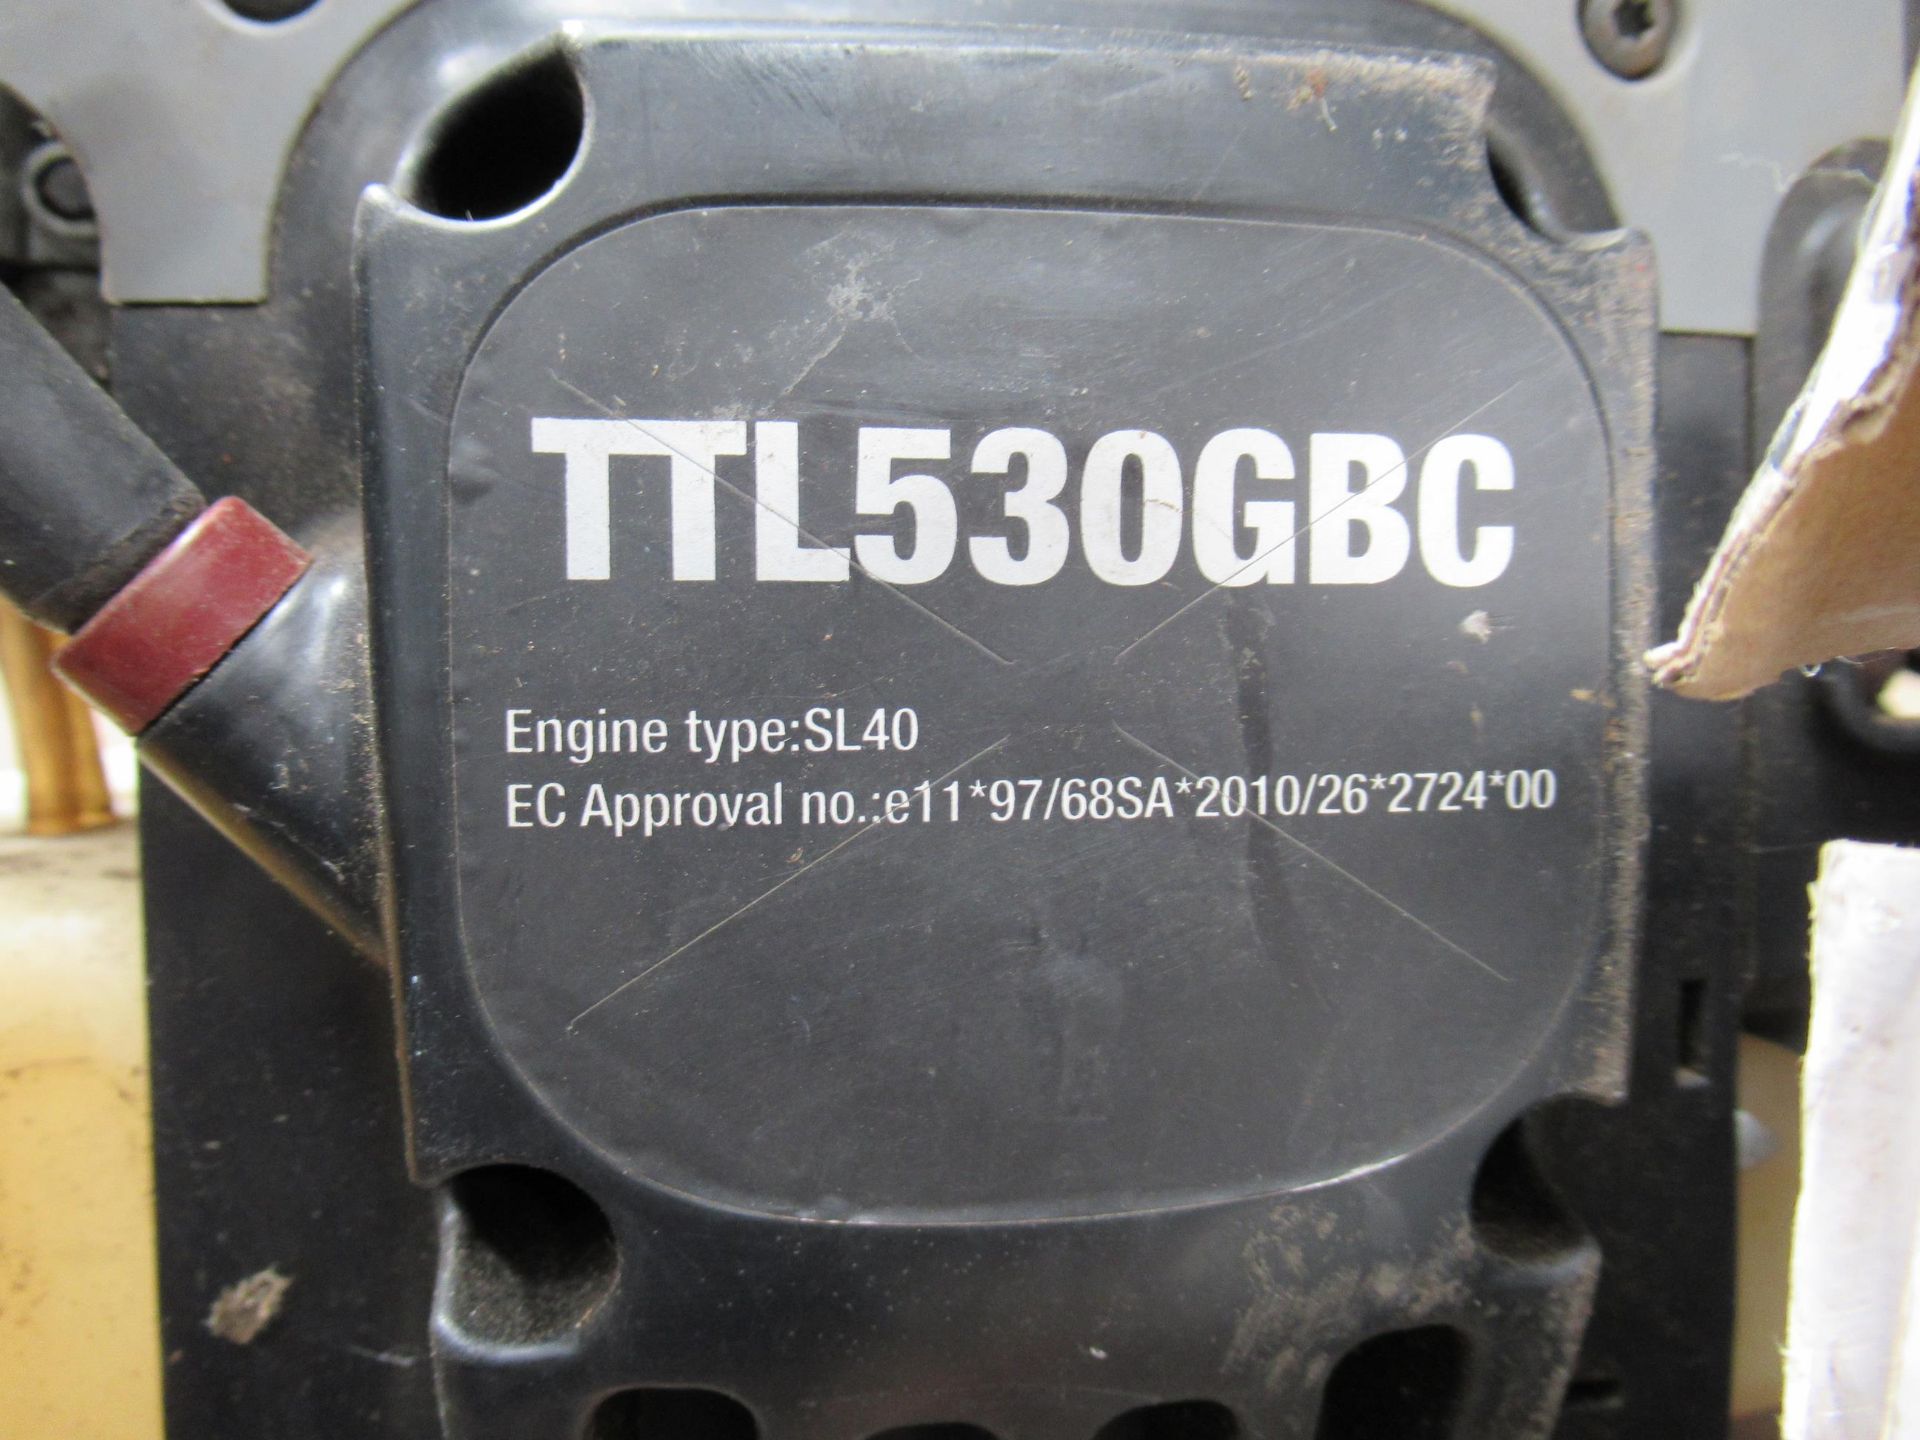 A Titan TTL530GBC "bullhorn" interchangeable strimmer/chainsaw - Image 4 of 8